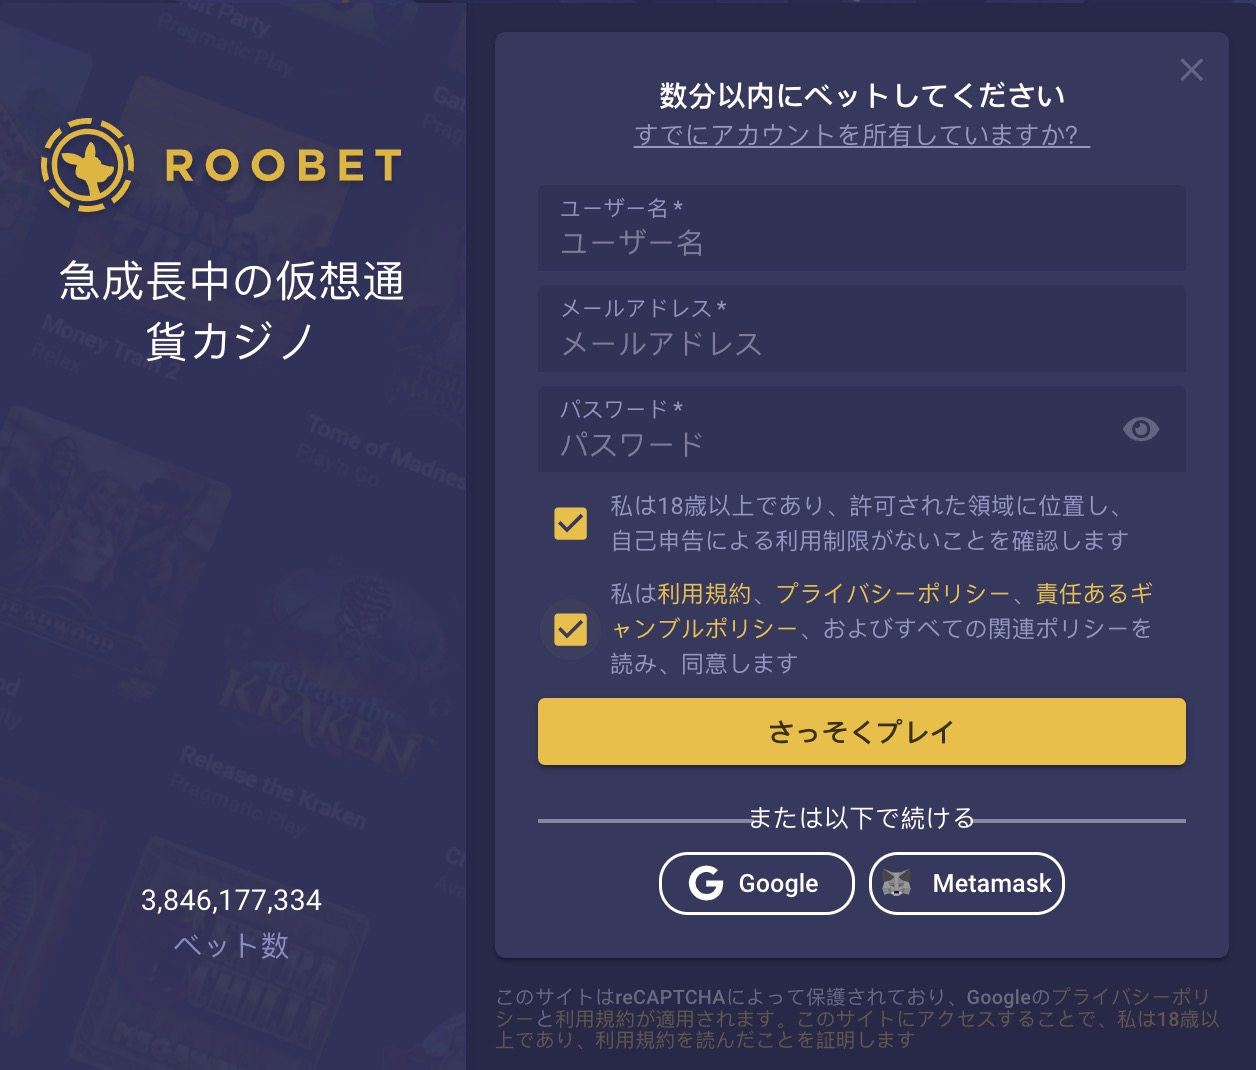 Roobet homepage image 13